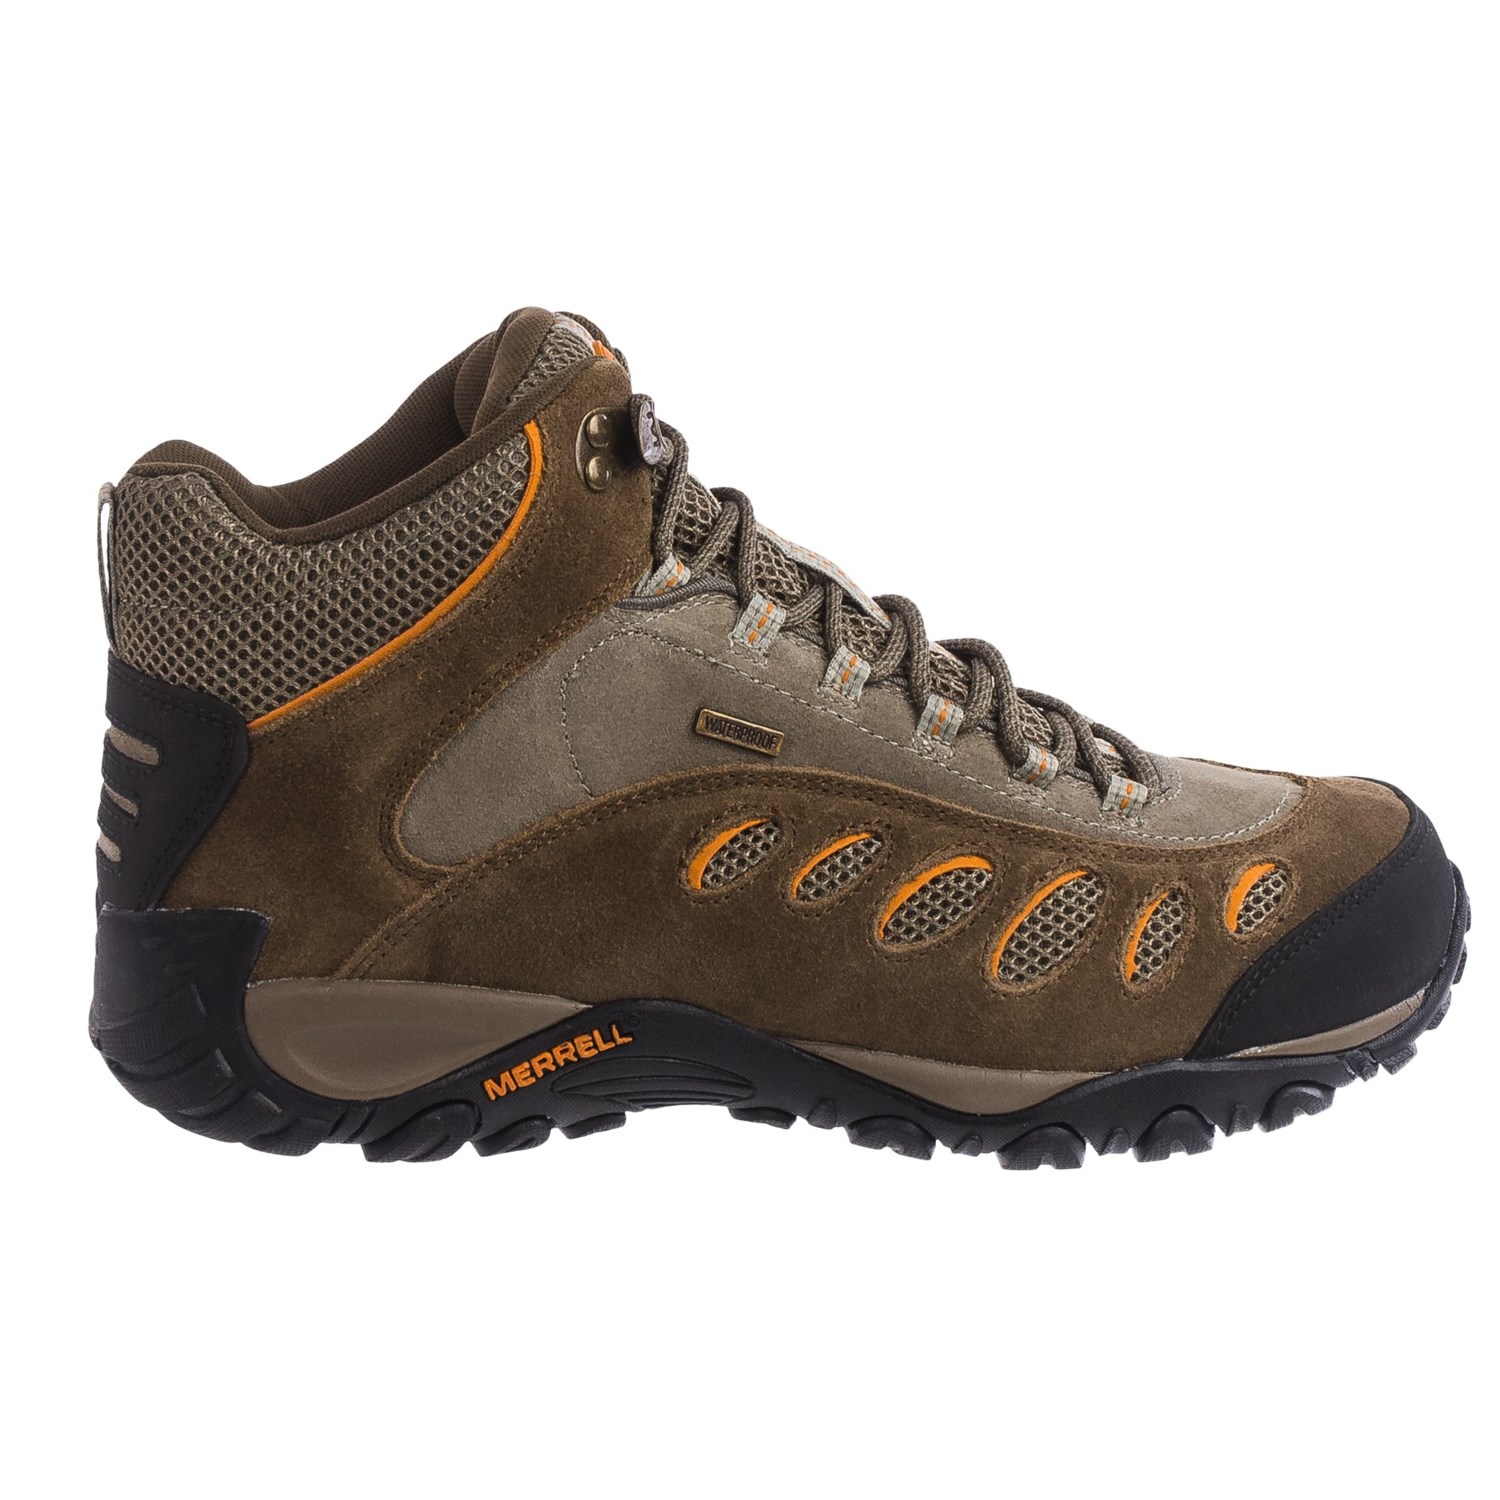 Merrell Yokota Pulse Mid Hiking Boots (For Men) - Save 45%